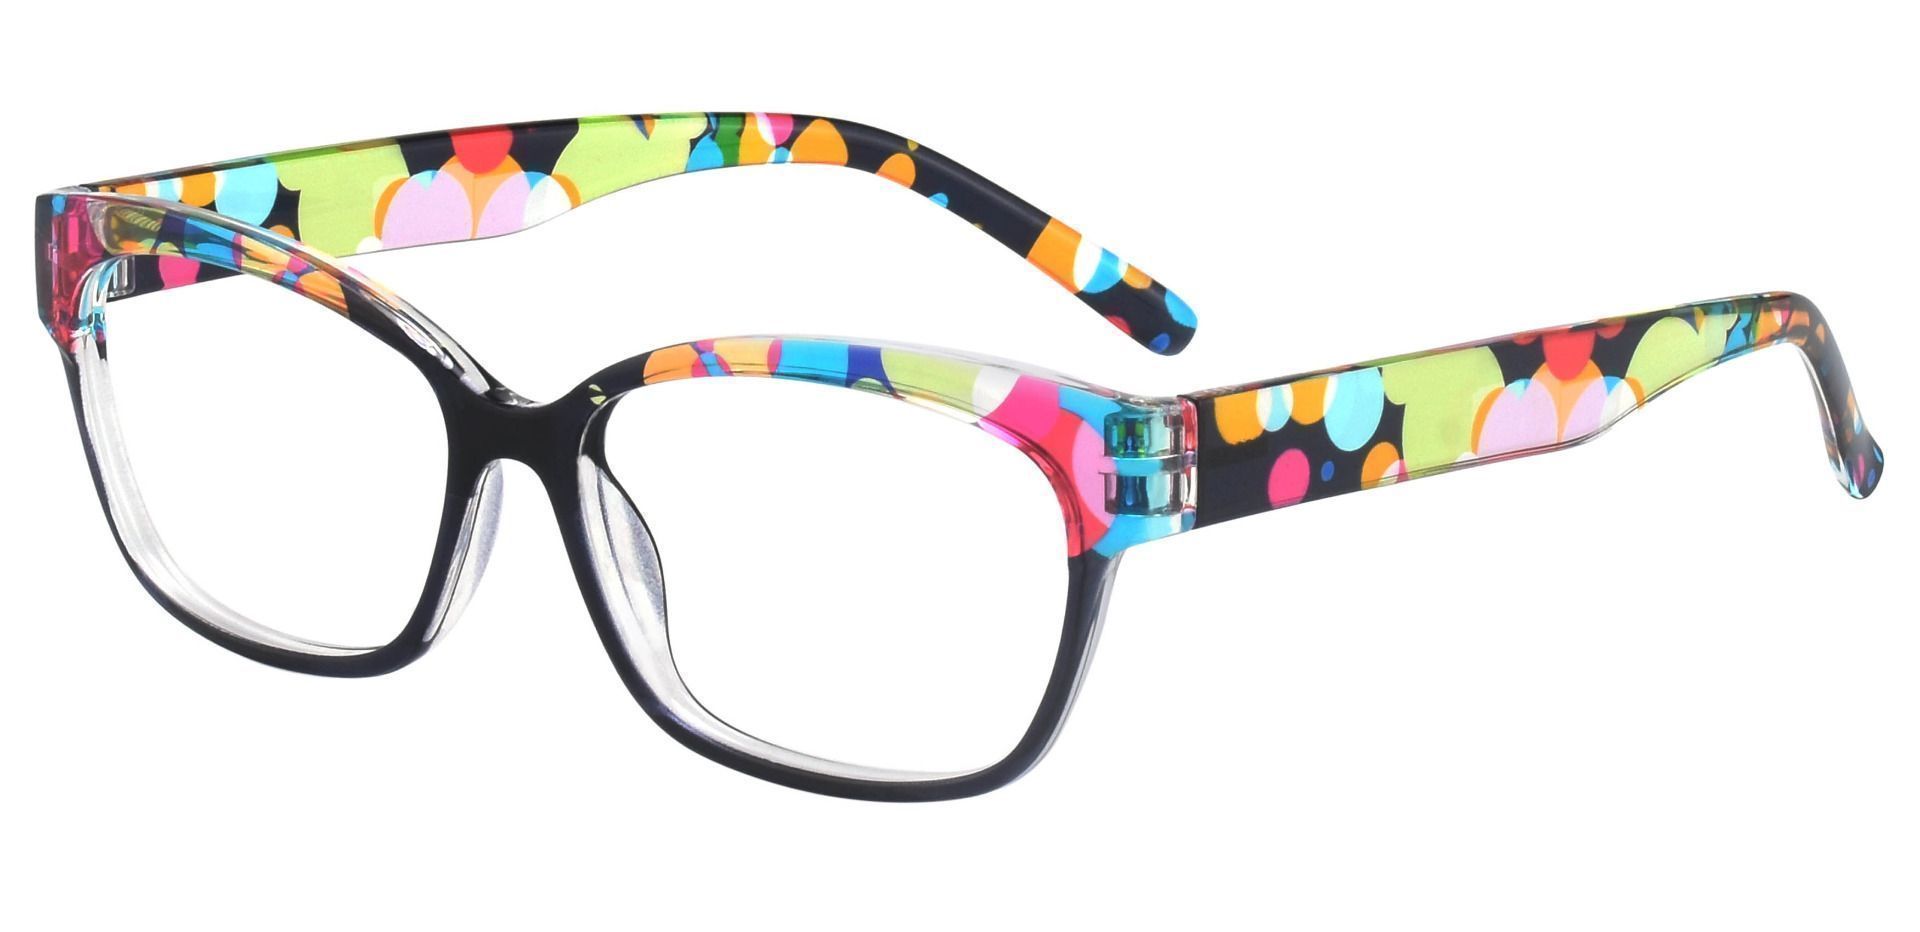 Adele Cat-Eye Prescription Glasses - Multi Color